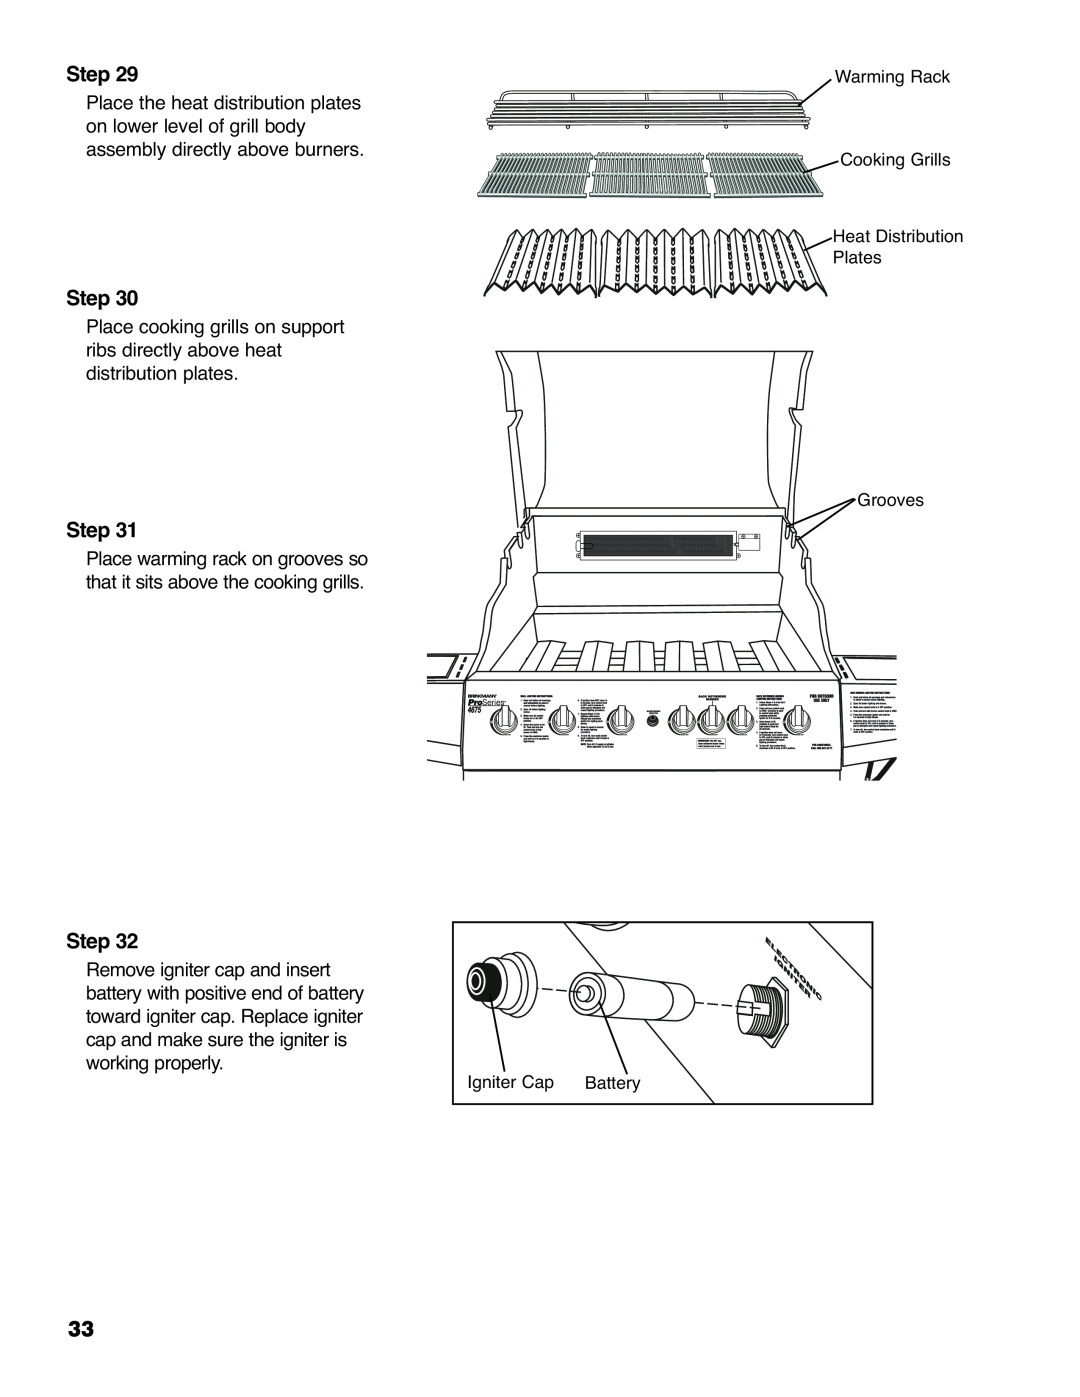 Brinkmann ProSeries 4675 owner manual Step, Warming Rack Cooking Grills Heat Distribution Plates Grooves 